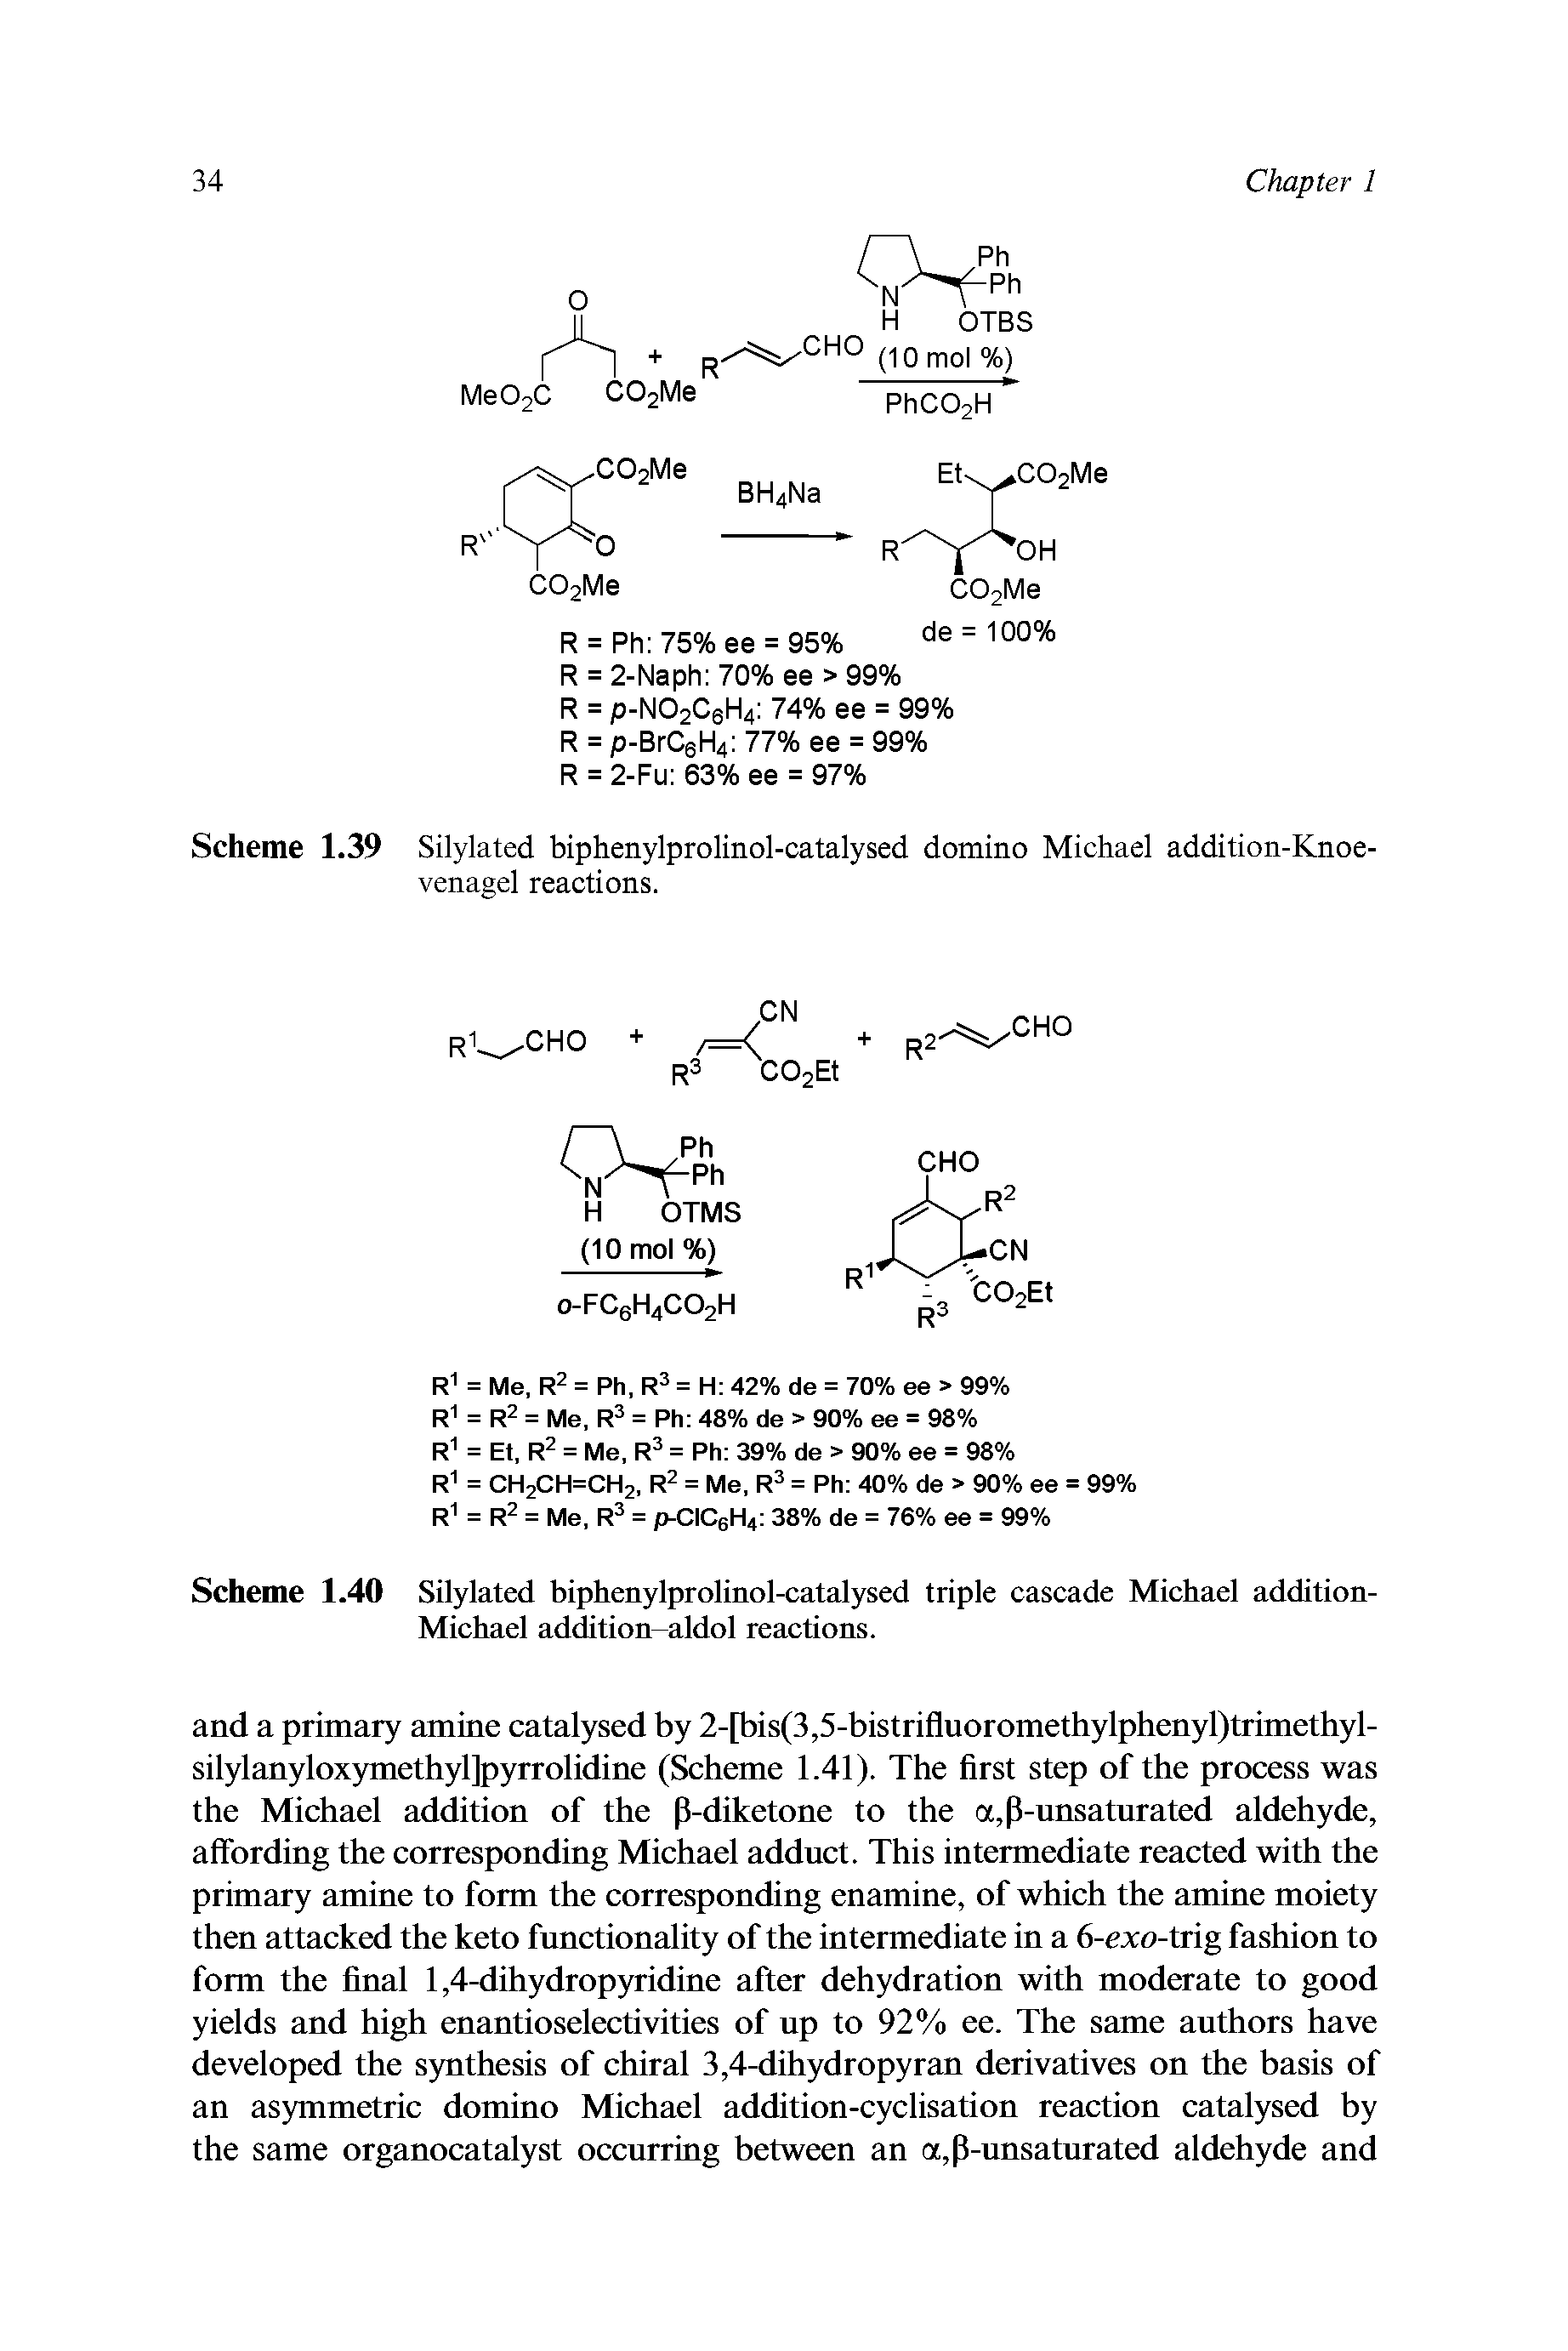 Scheme 1.40 Silylated biphenylprolinol-catalysed triple cascade Michael addition-Michael addition aldol reactions.